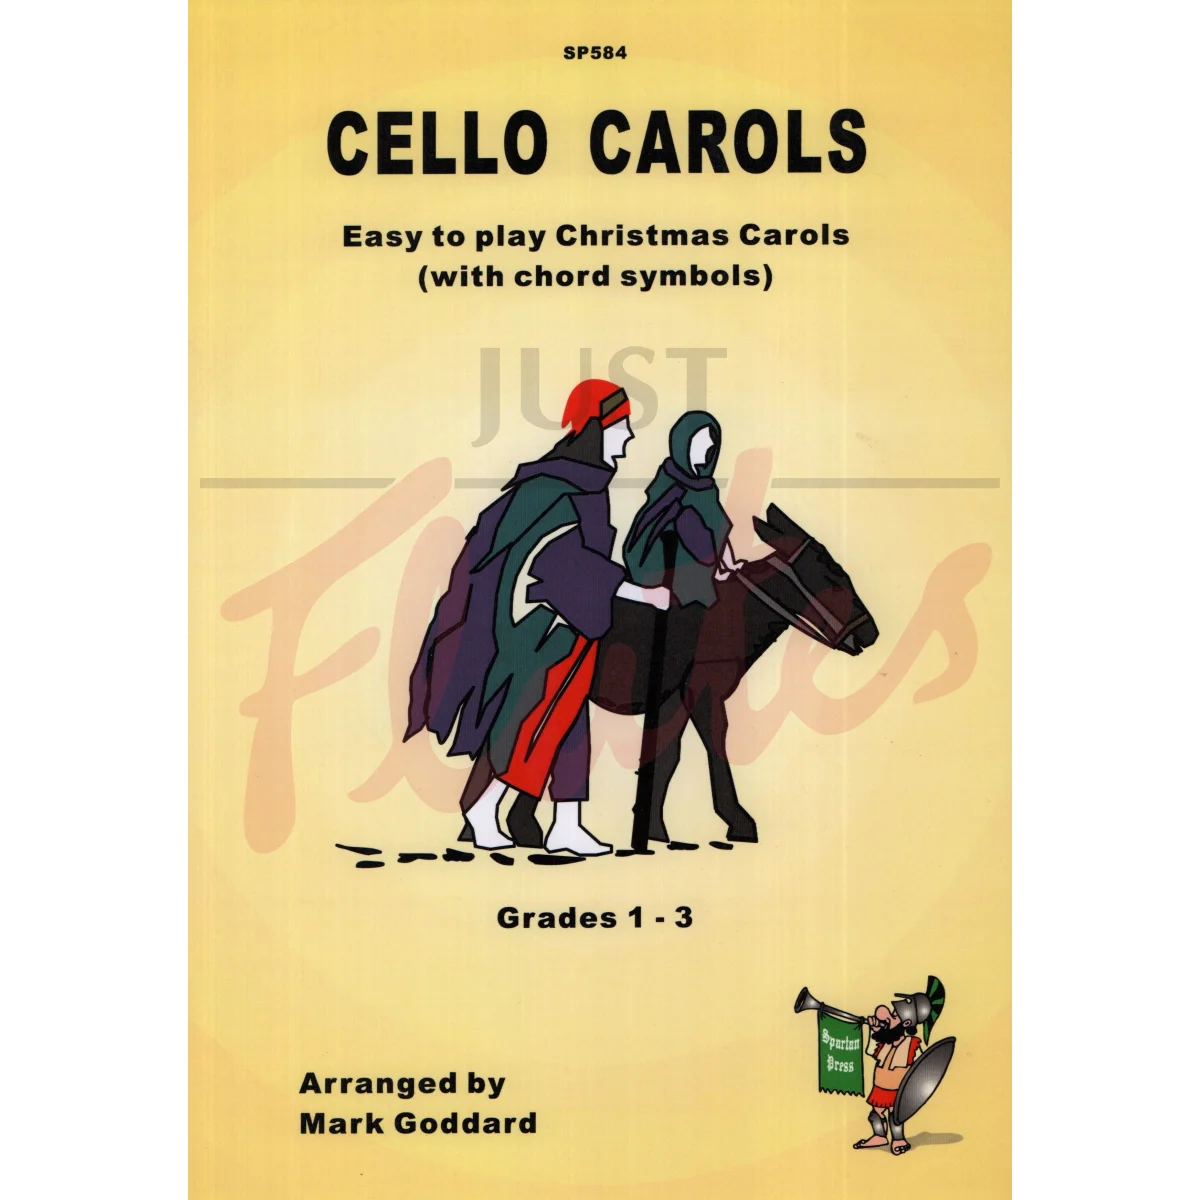 Cello Carols for Cello and Chordal Instrument